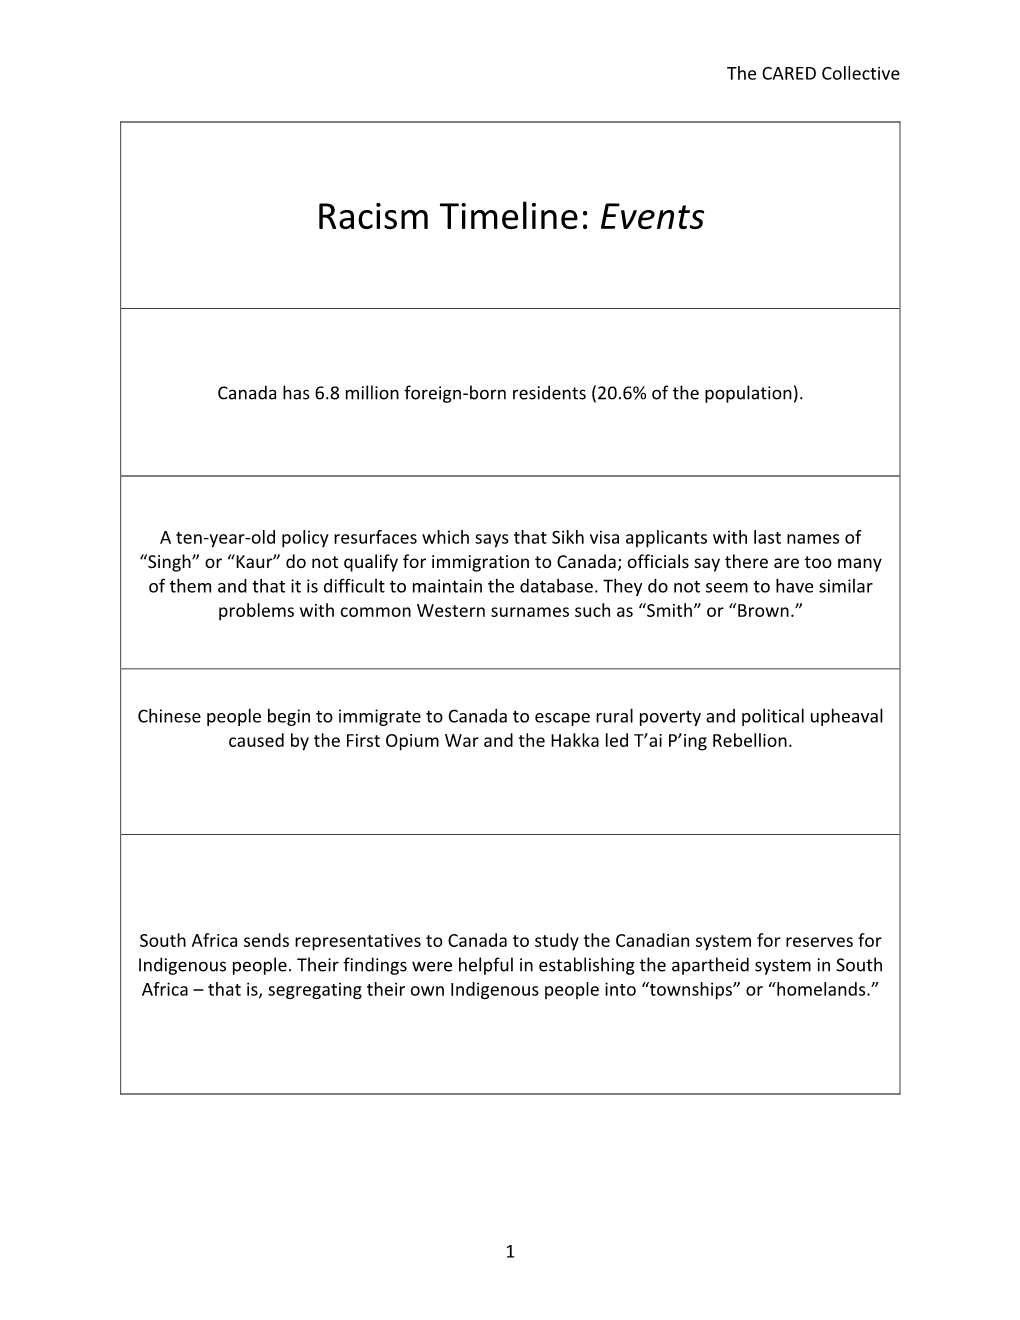 Racism Timeline: Events